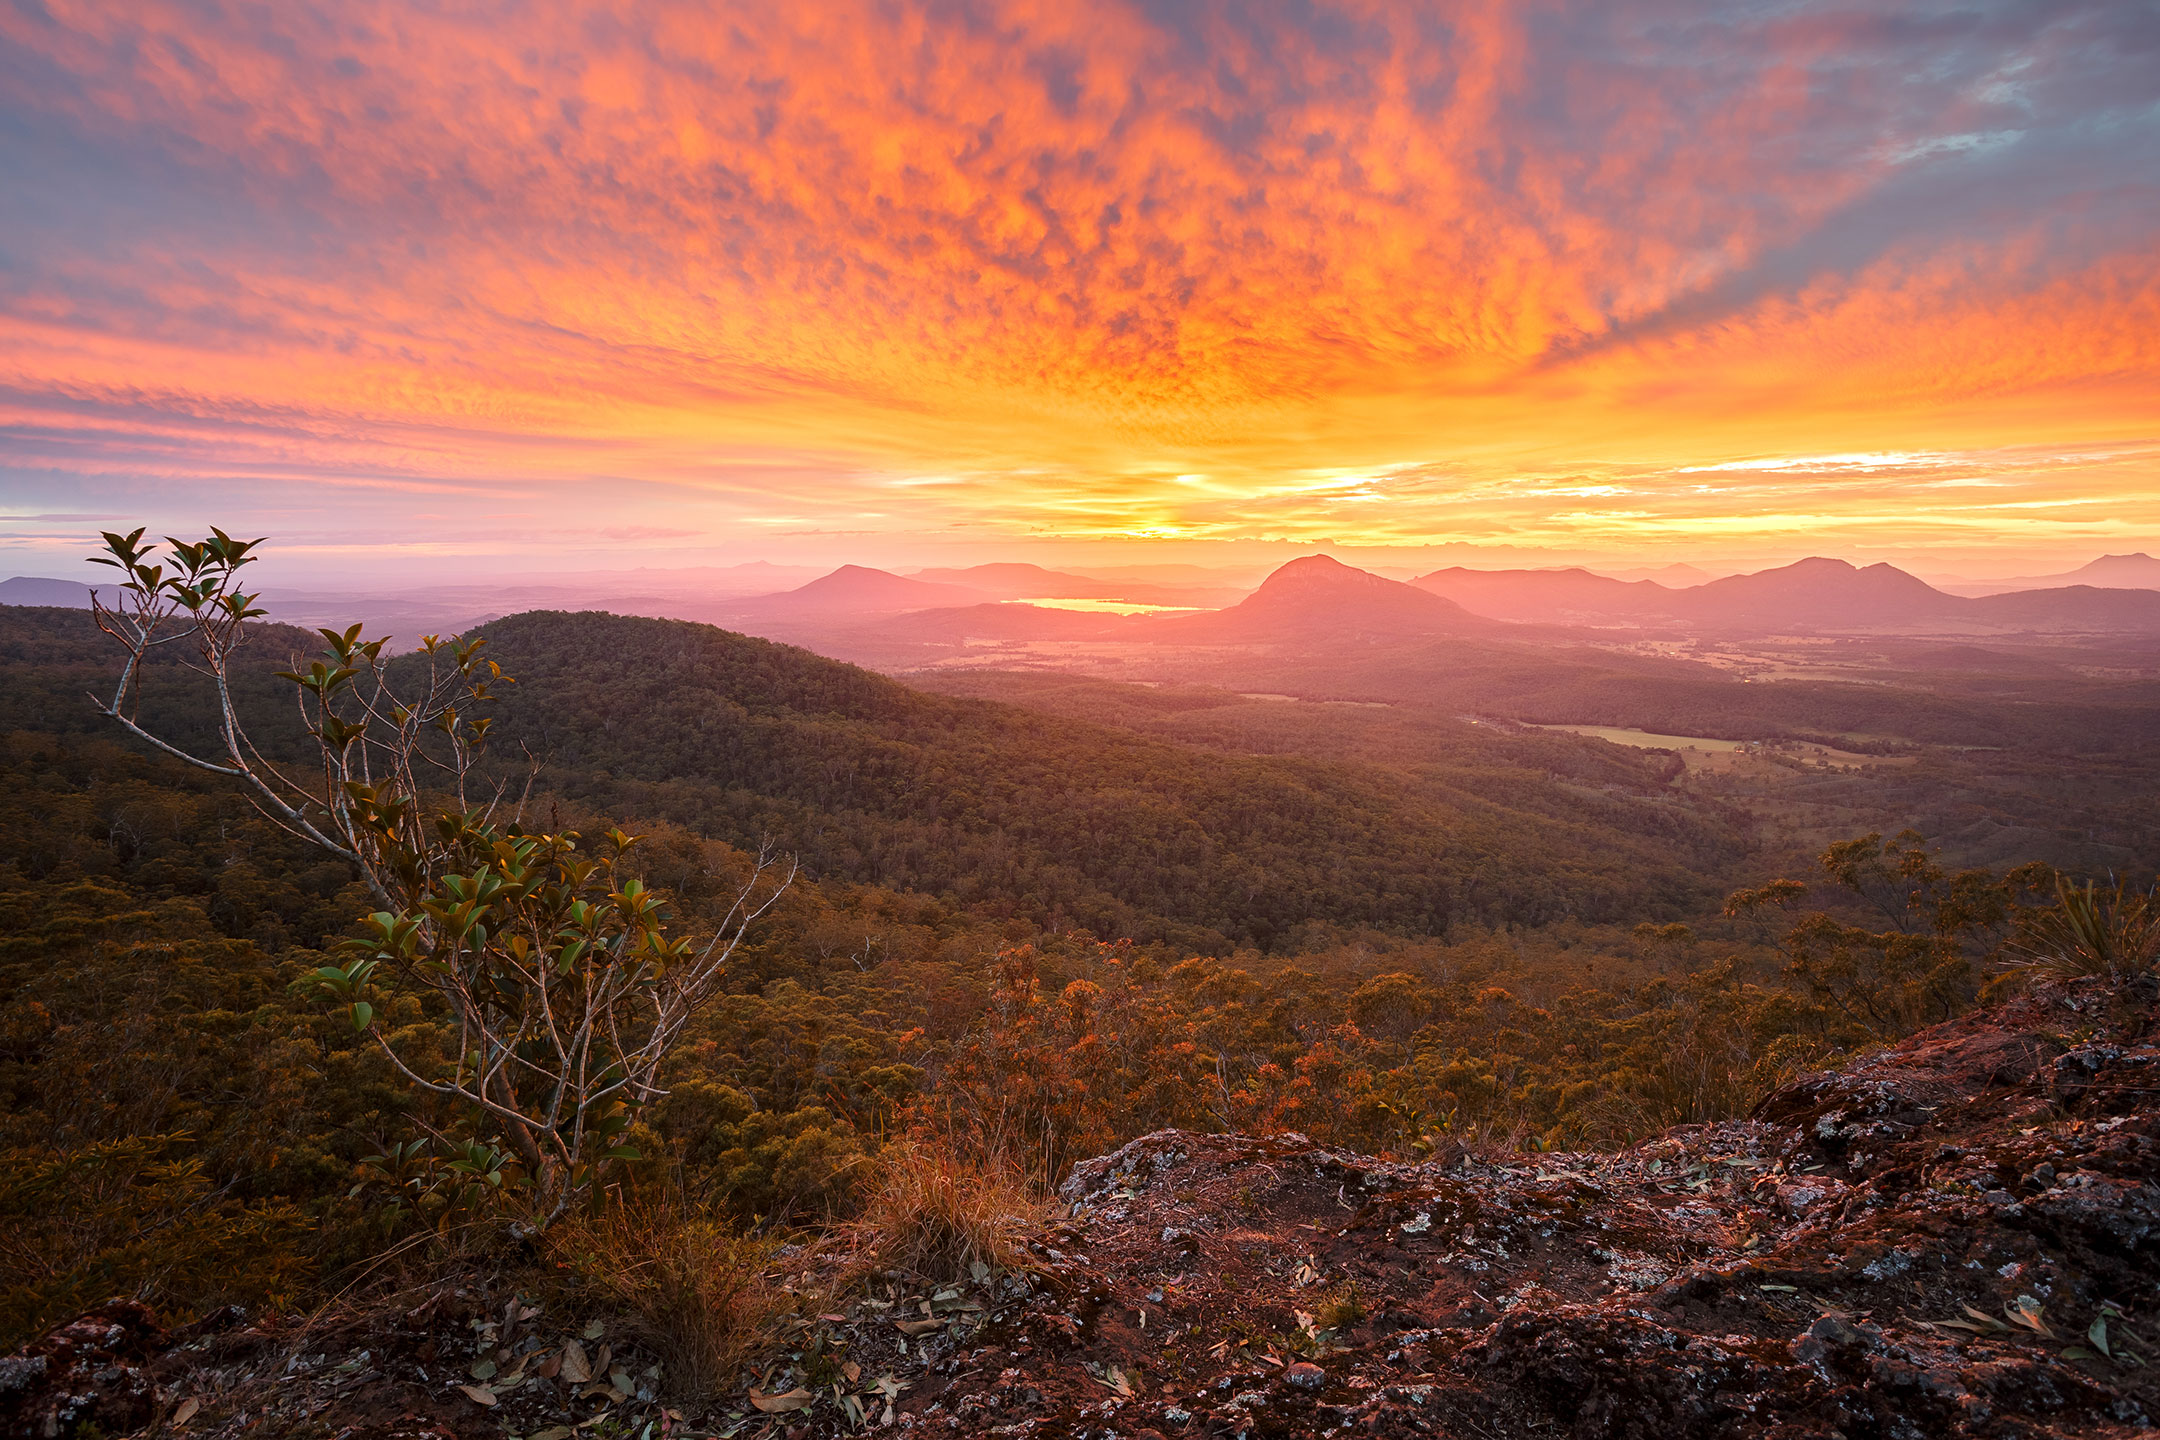 Sunrise over the Scenic Rim from Governor's Chair, Spicer's Gap, Main Range National Park, Australia